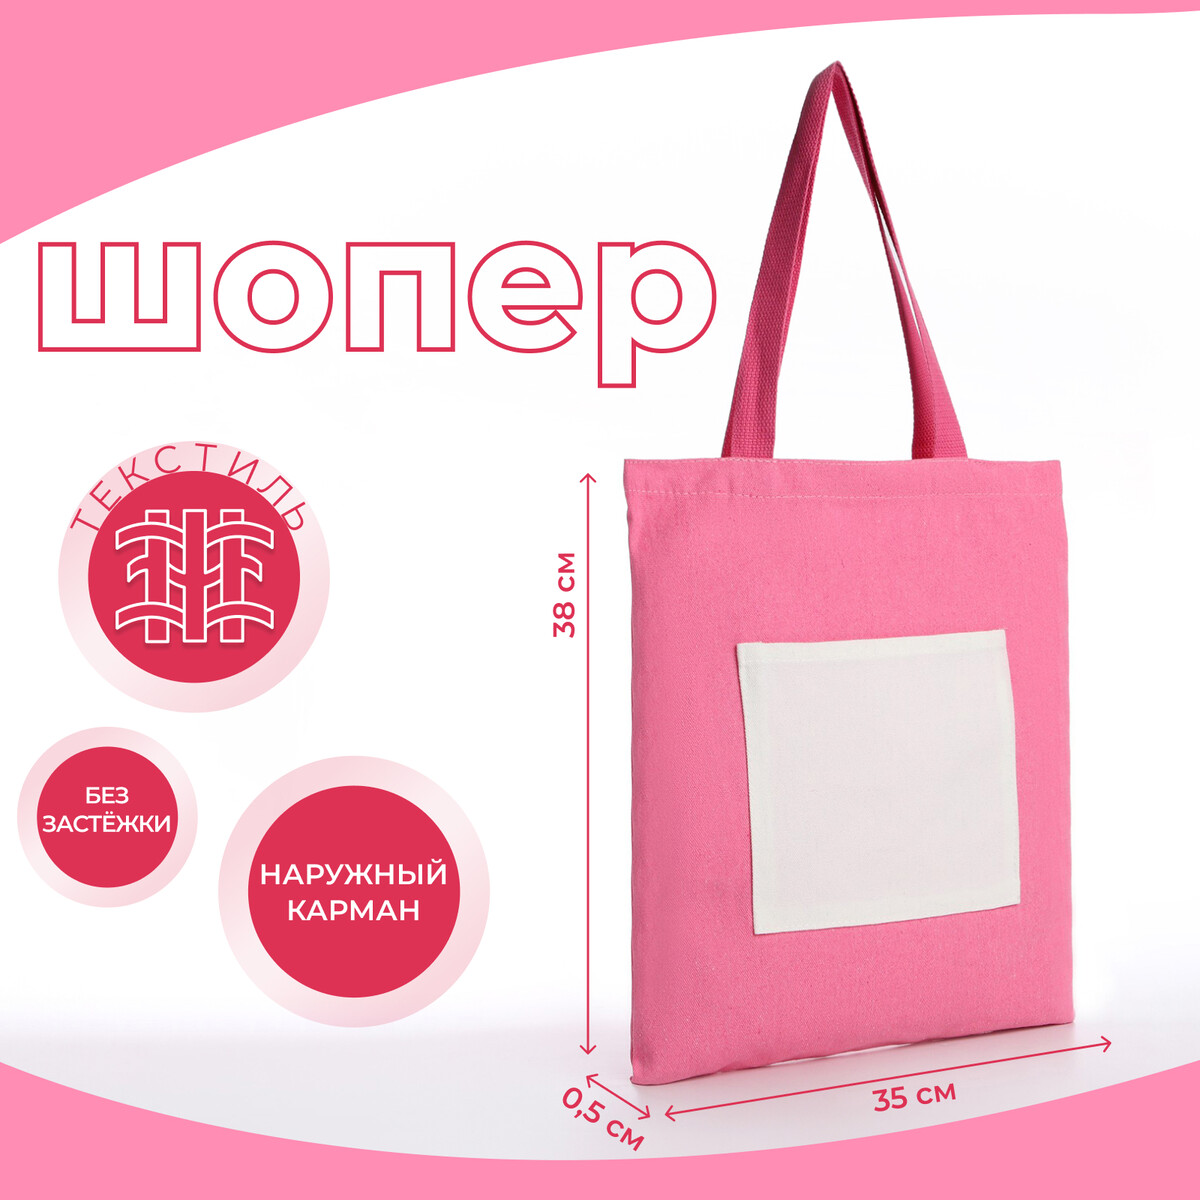 Сумка-шопер без застежки, из текстиля, цвет розовый/белый сумка шопер без застежки из текстиля розовый